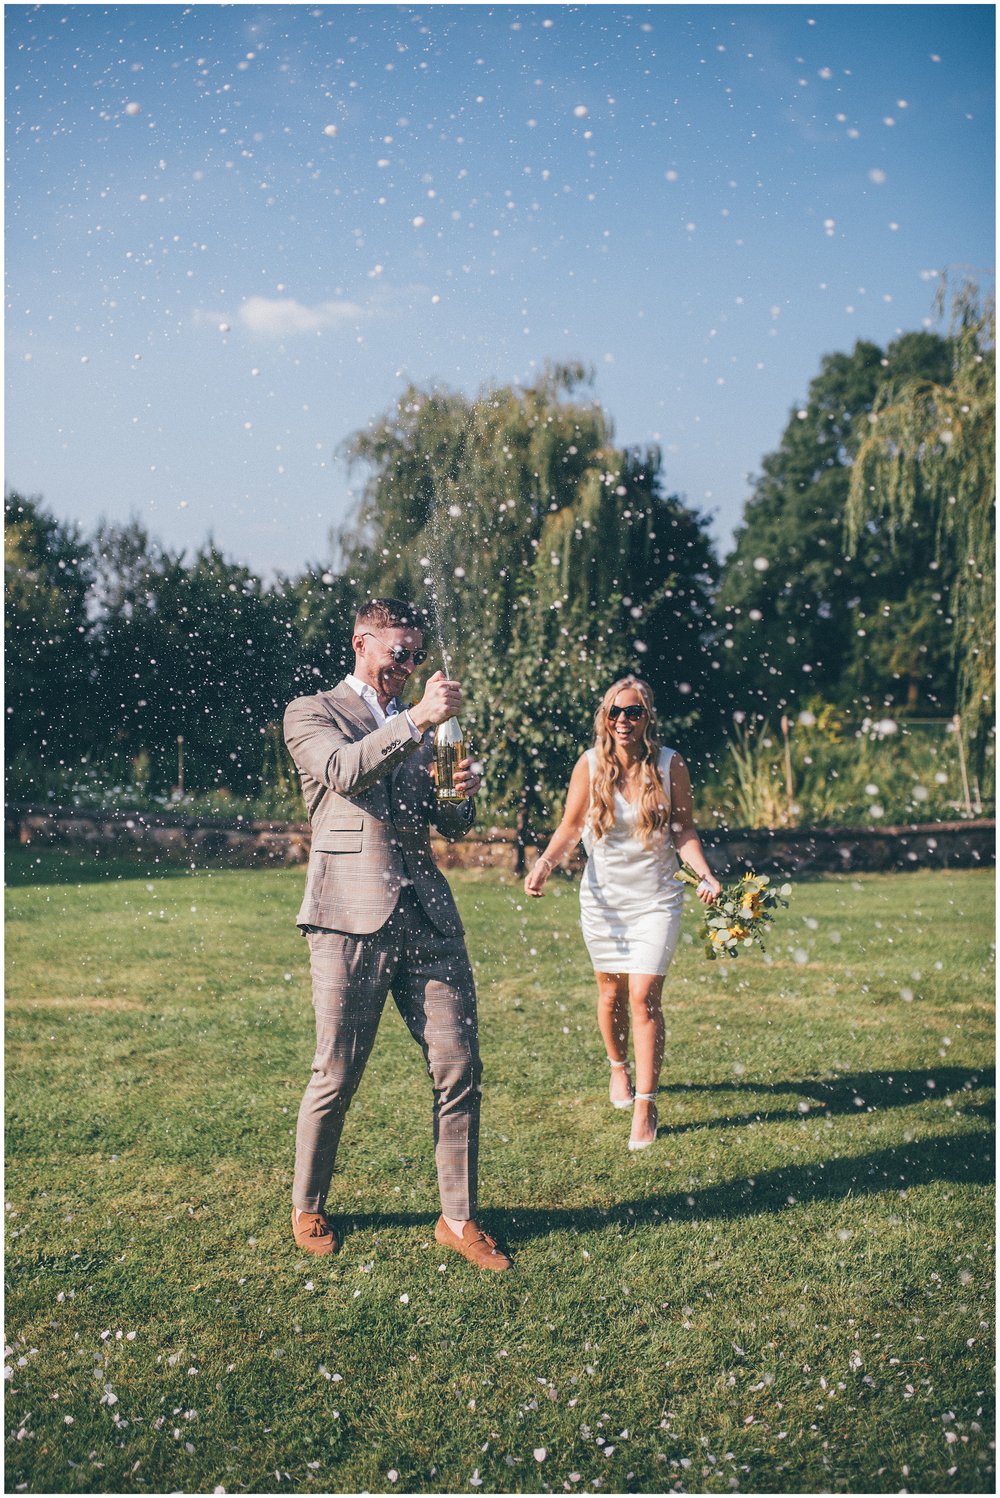 Groom sprays champagne at their garden wedding in Cheshire